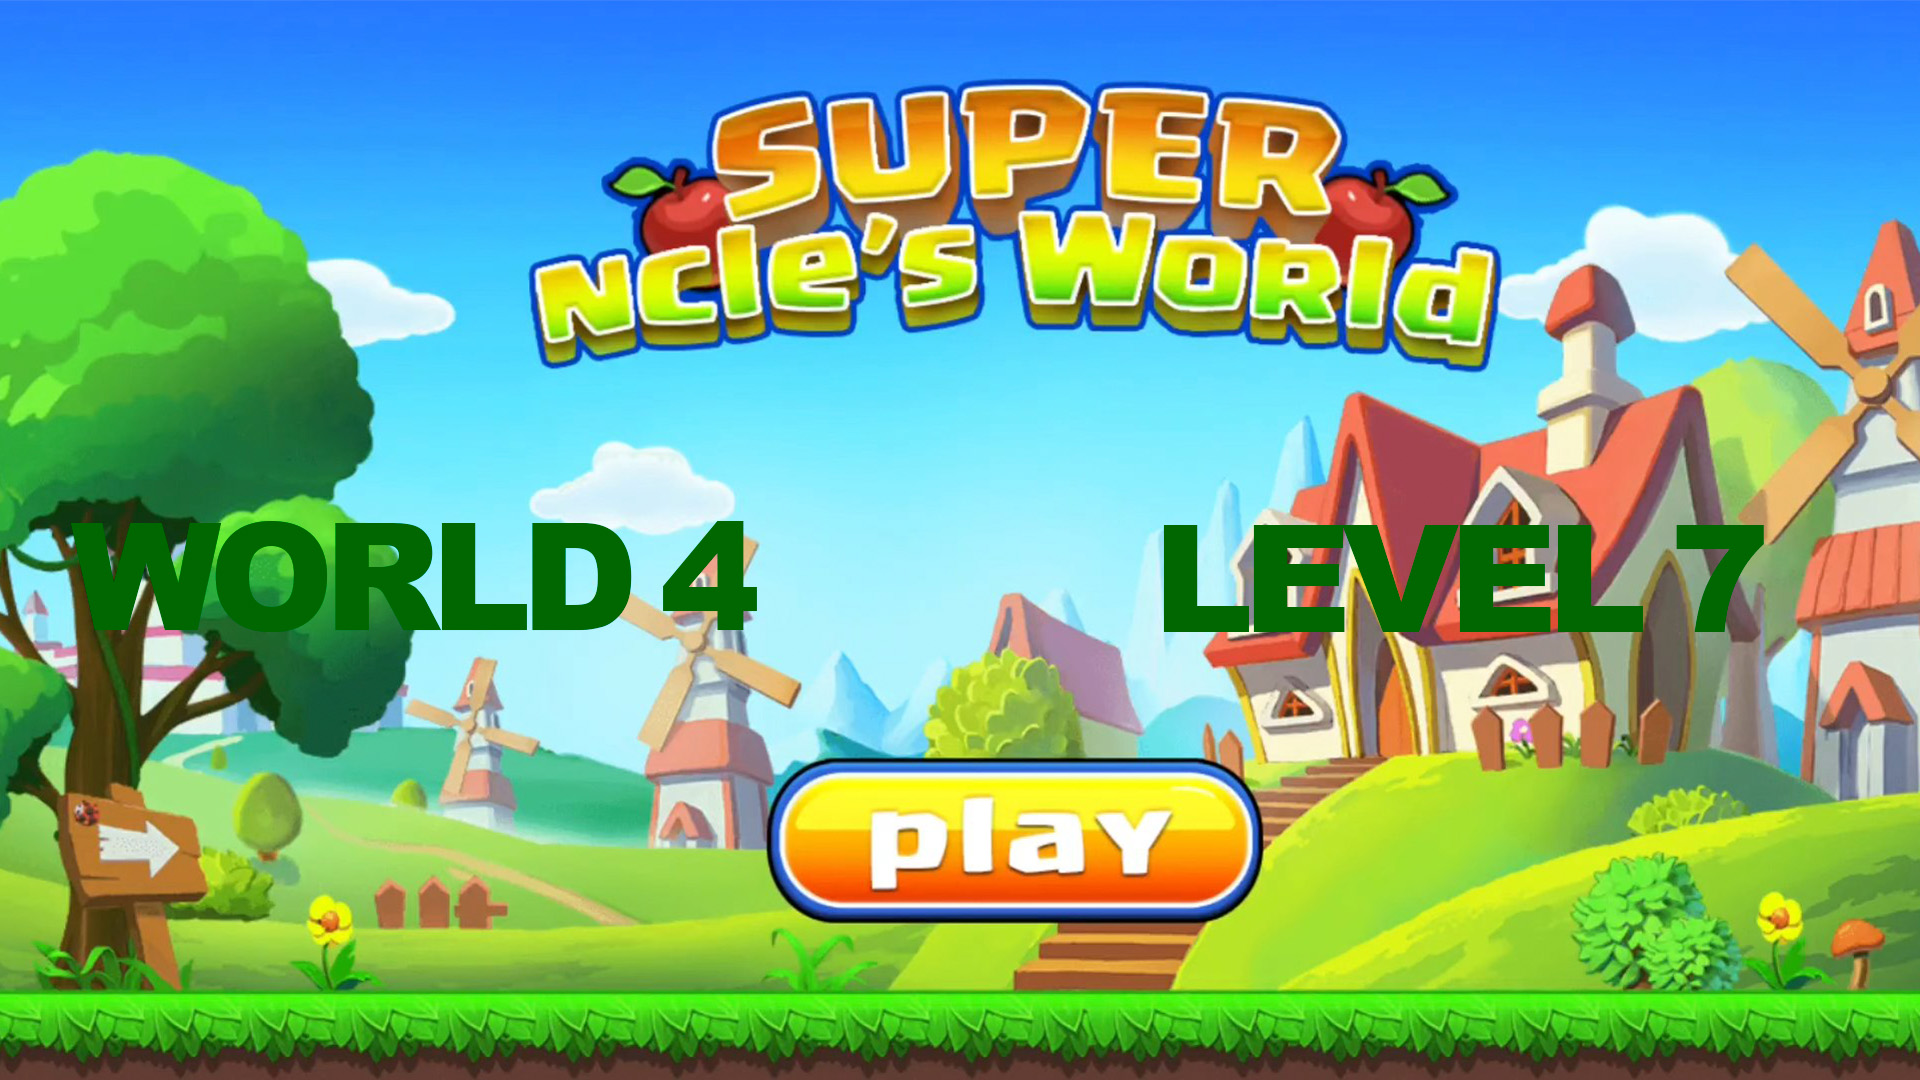 Super ncle's  World 4. Level 7.